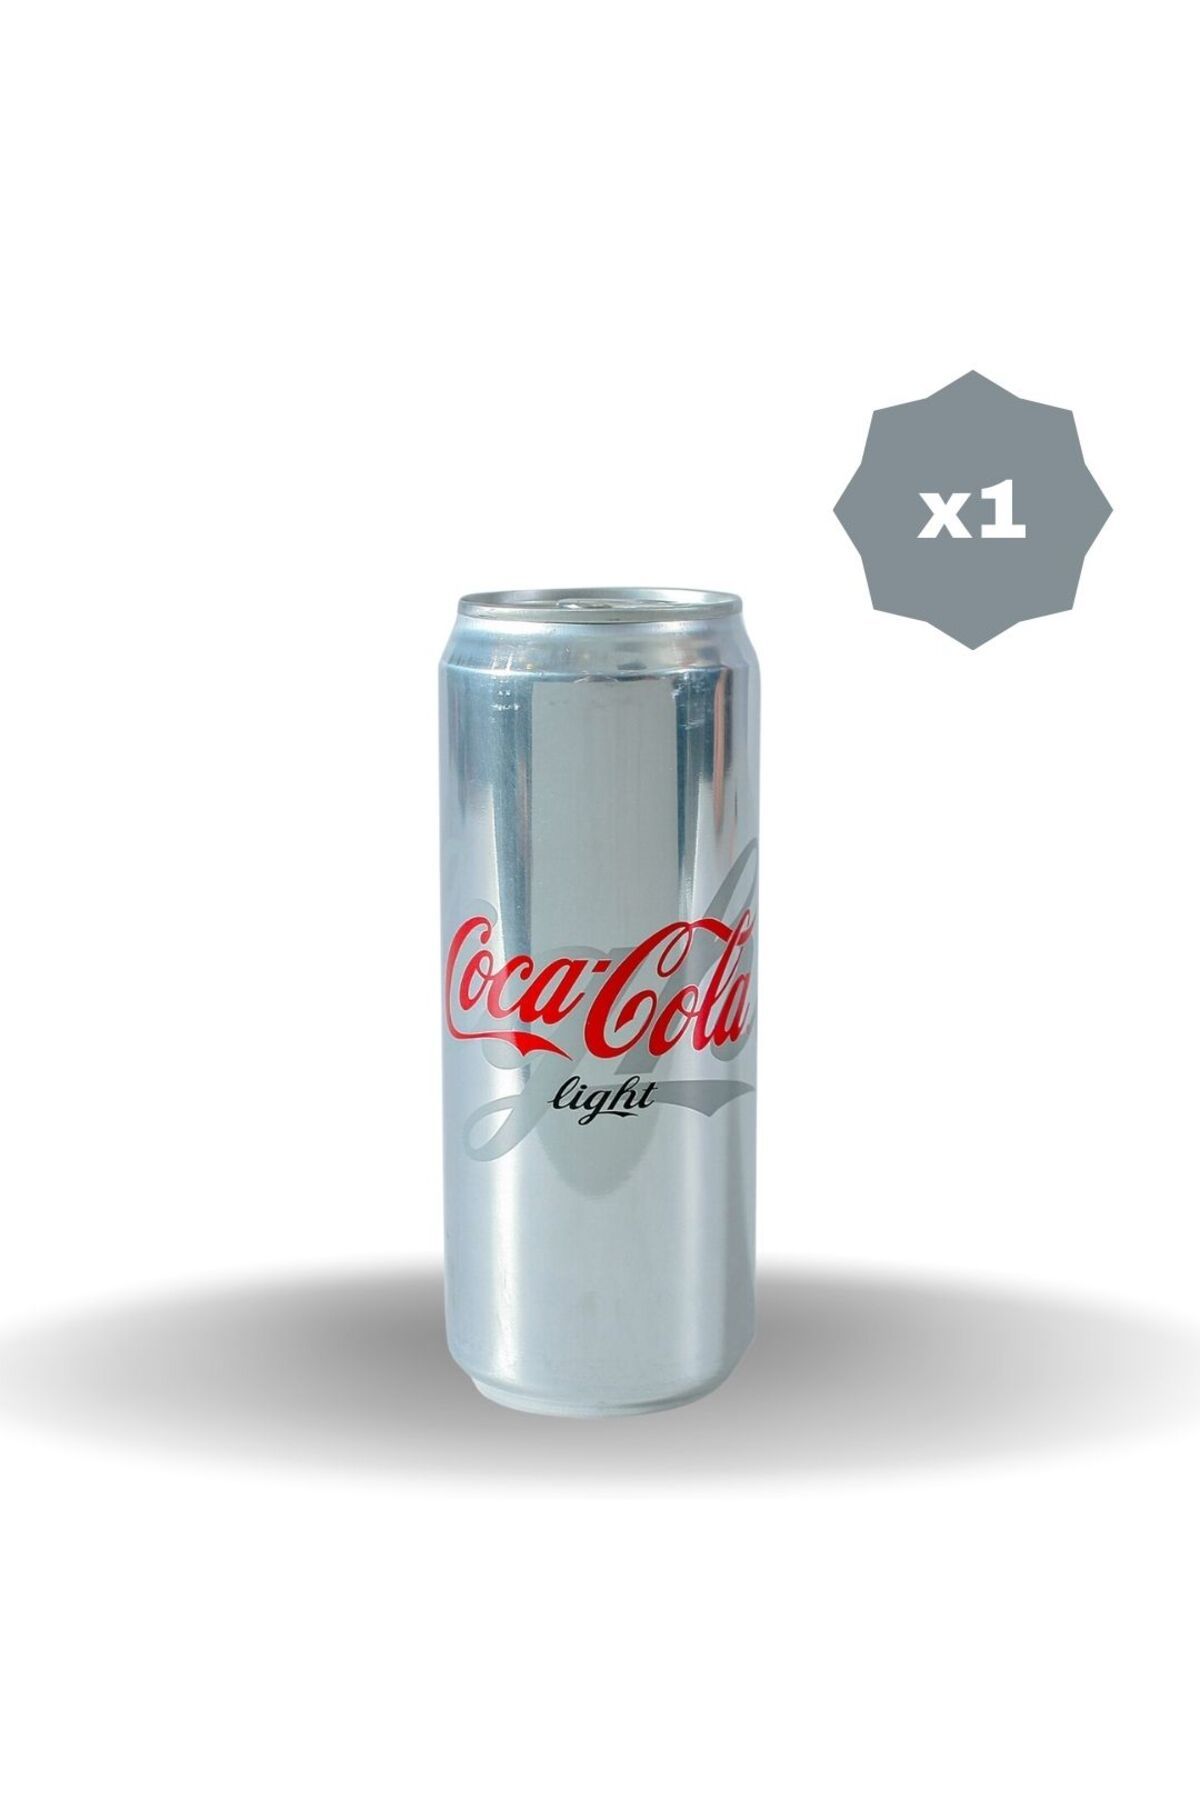 Coca-Cola COCA COLA LİGHT KUTU 330 ML X 1 ADET